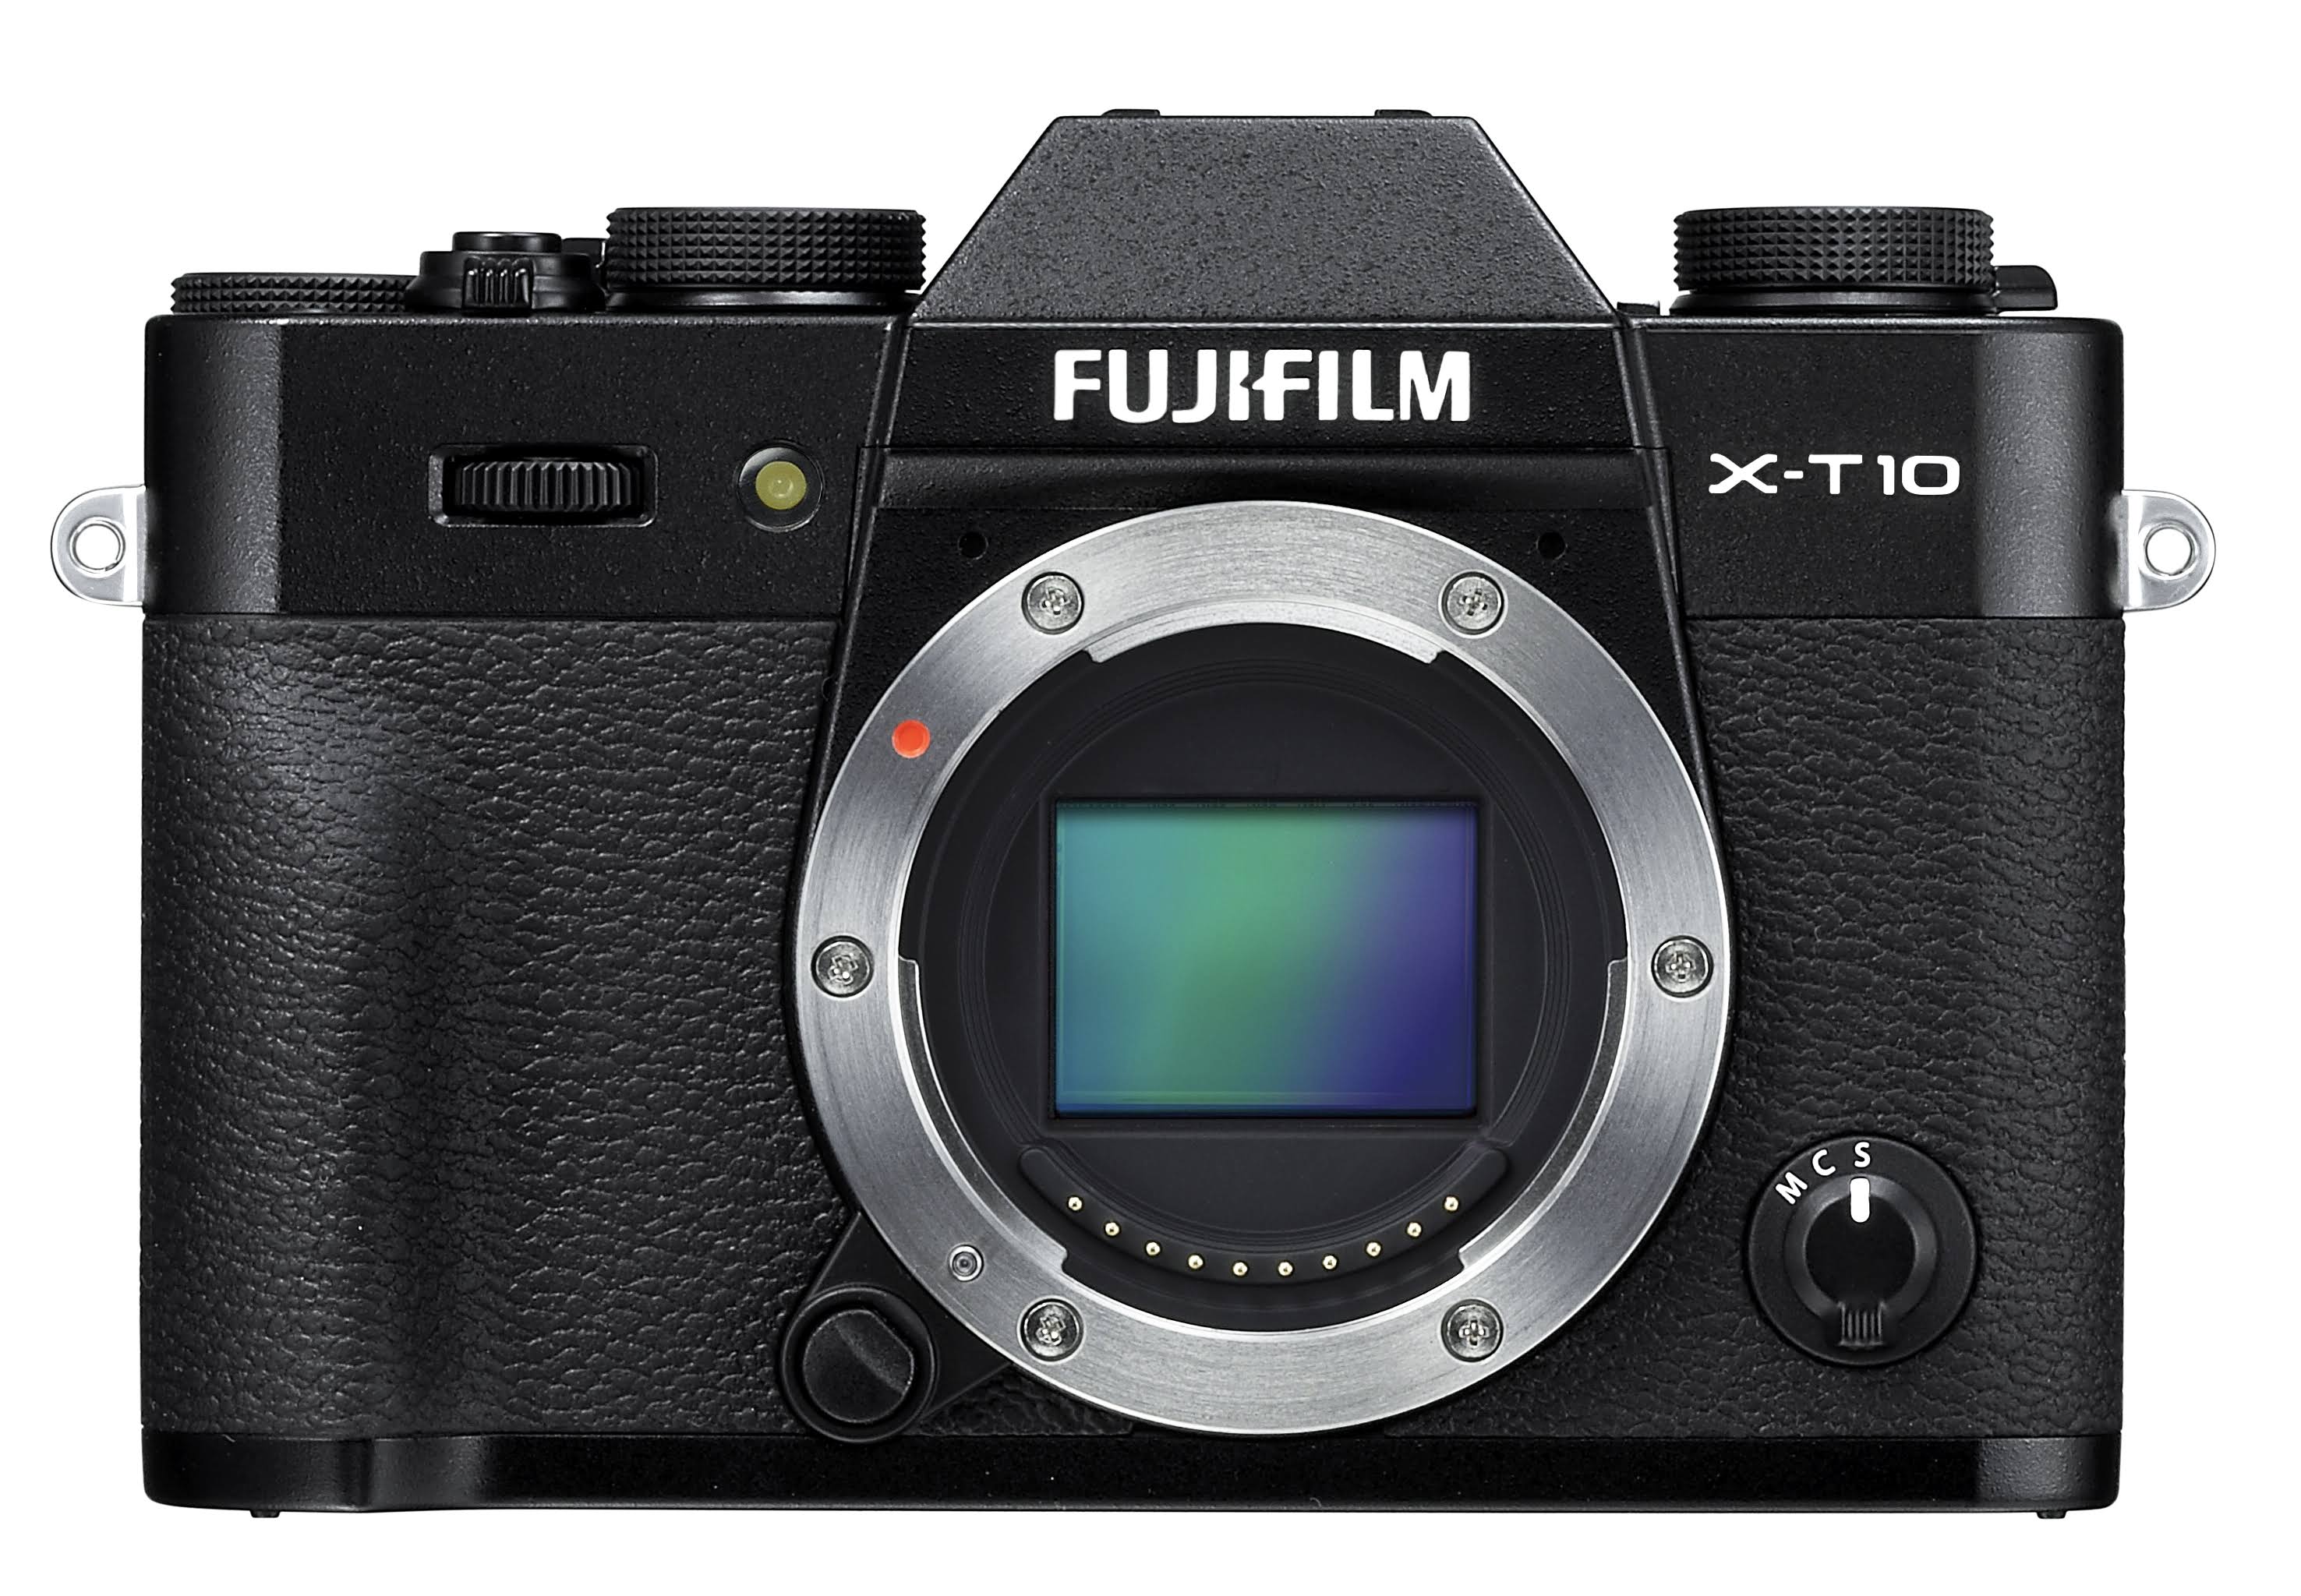 Fujifilm फुजीफिल्म एक्स-टी 10 बॉडी ब्लैक मिररलेस डिजिटल कैमरा